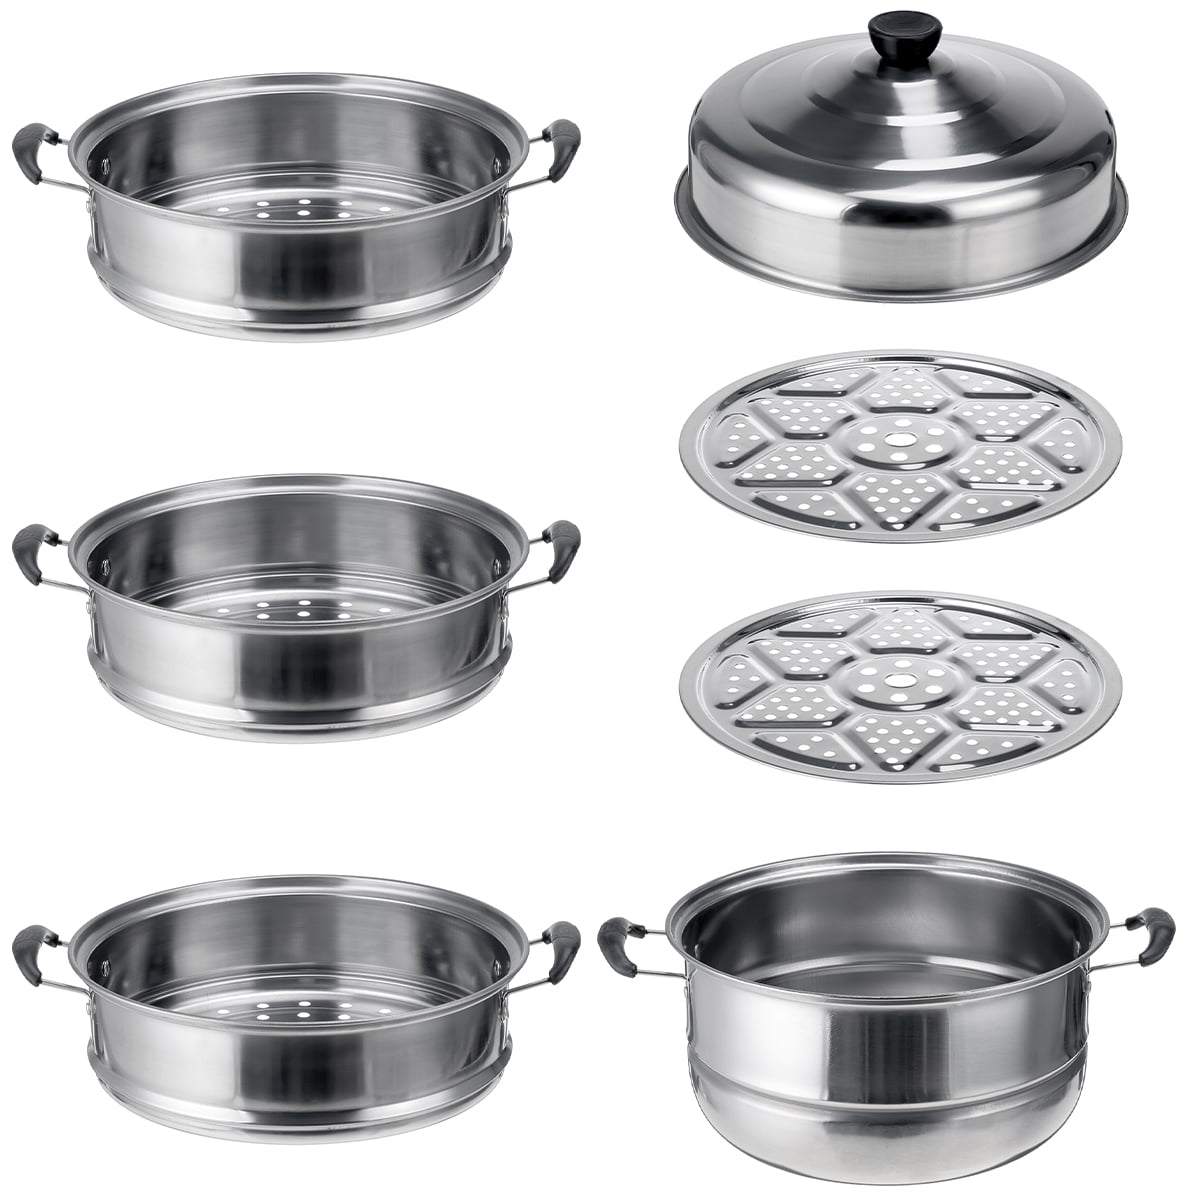 28cm Yardwe 5 Tier Premium Stainless Steel Steamer Set Cookware Pot Sauce pot Multi-layer Boiler